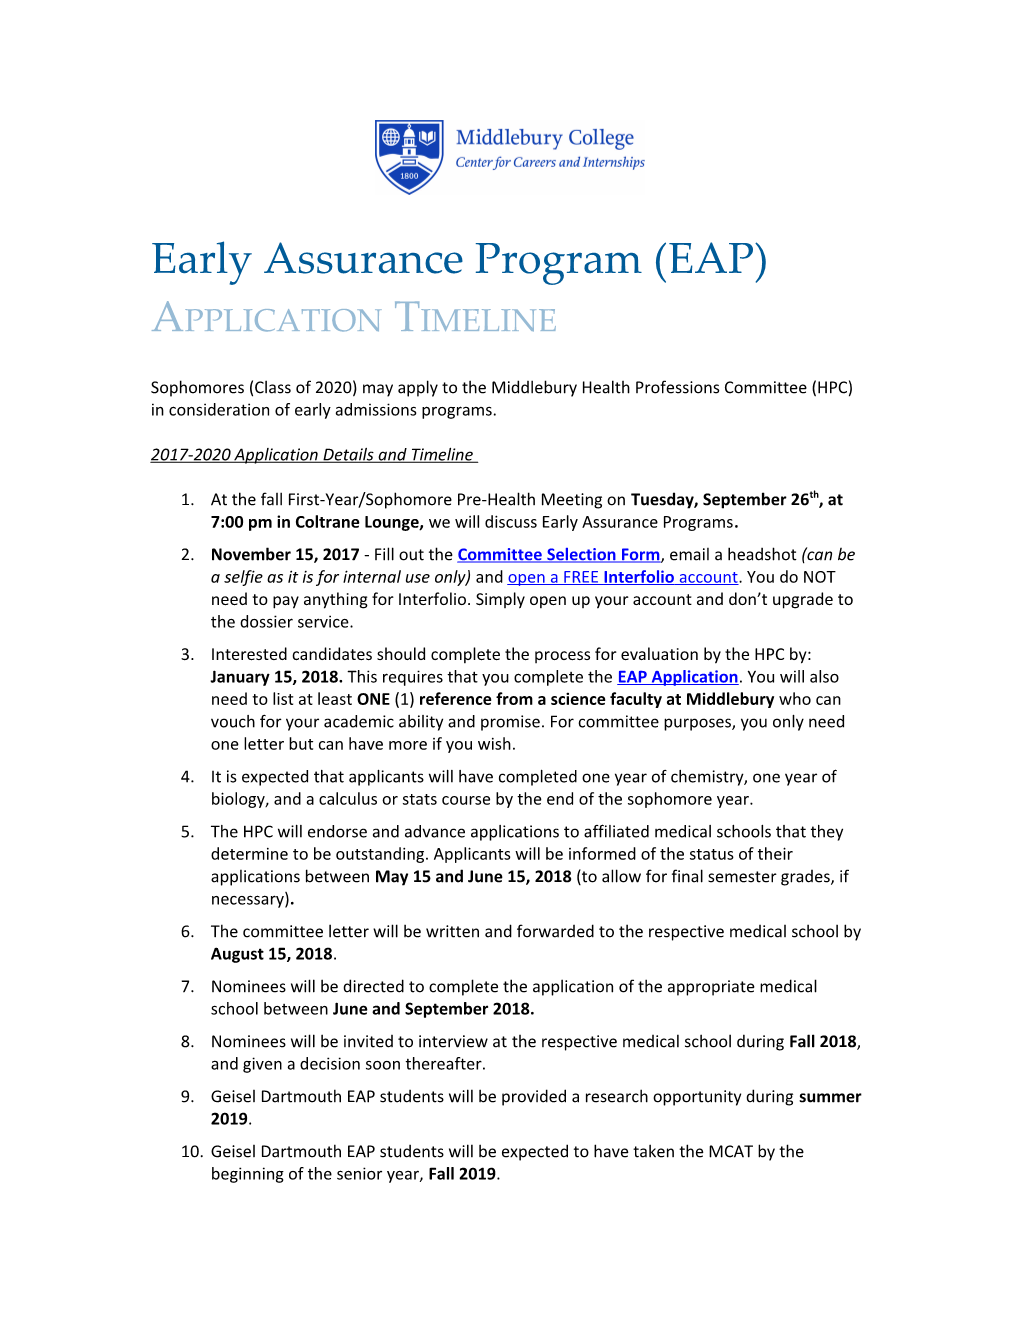 Early Assurance Program (EAP) Application Timeline